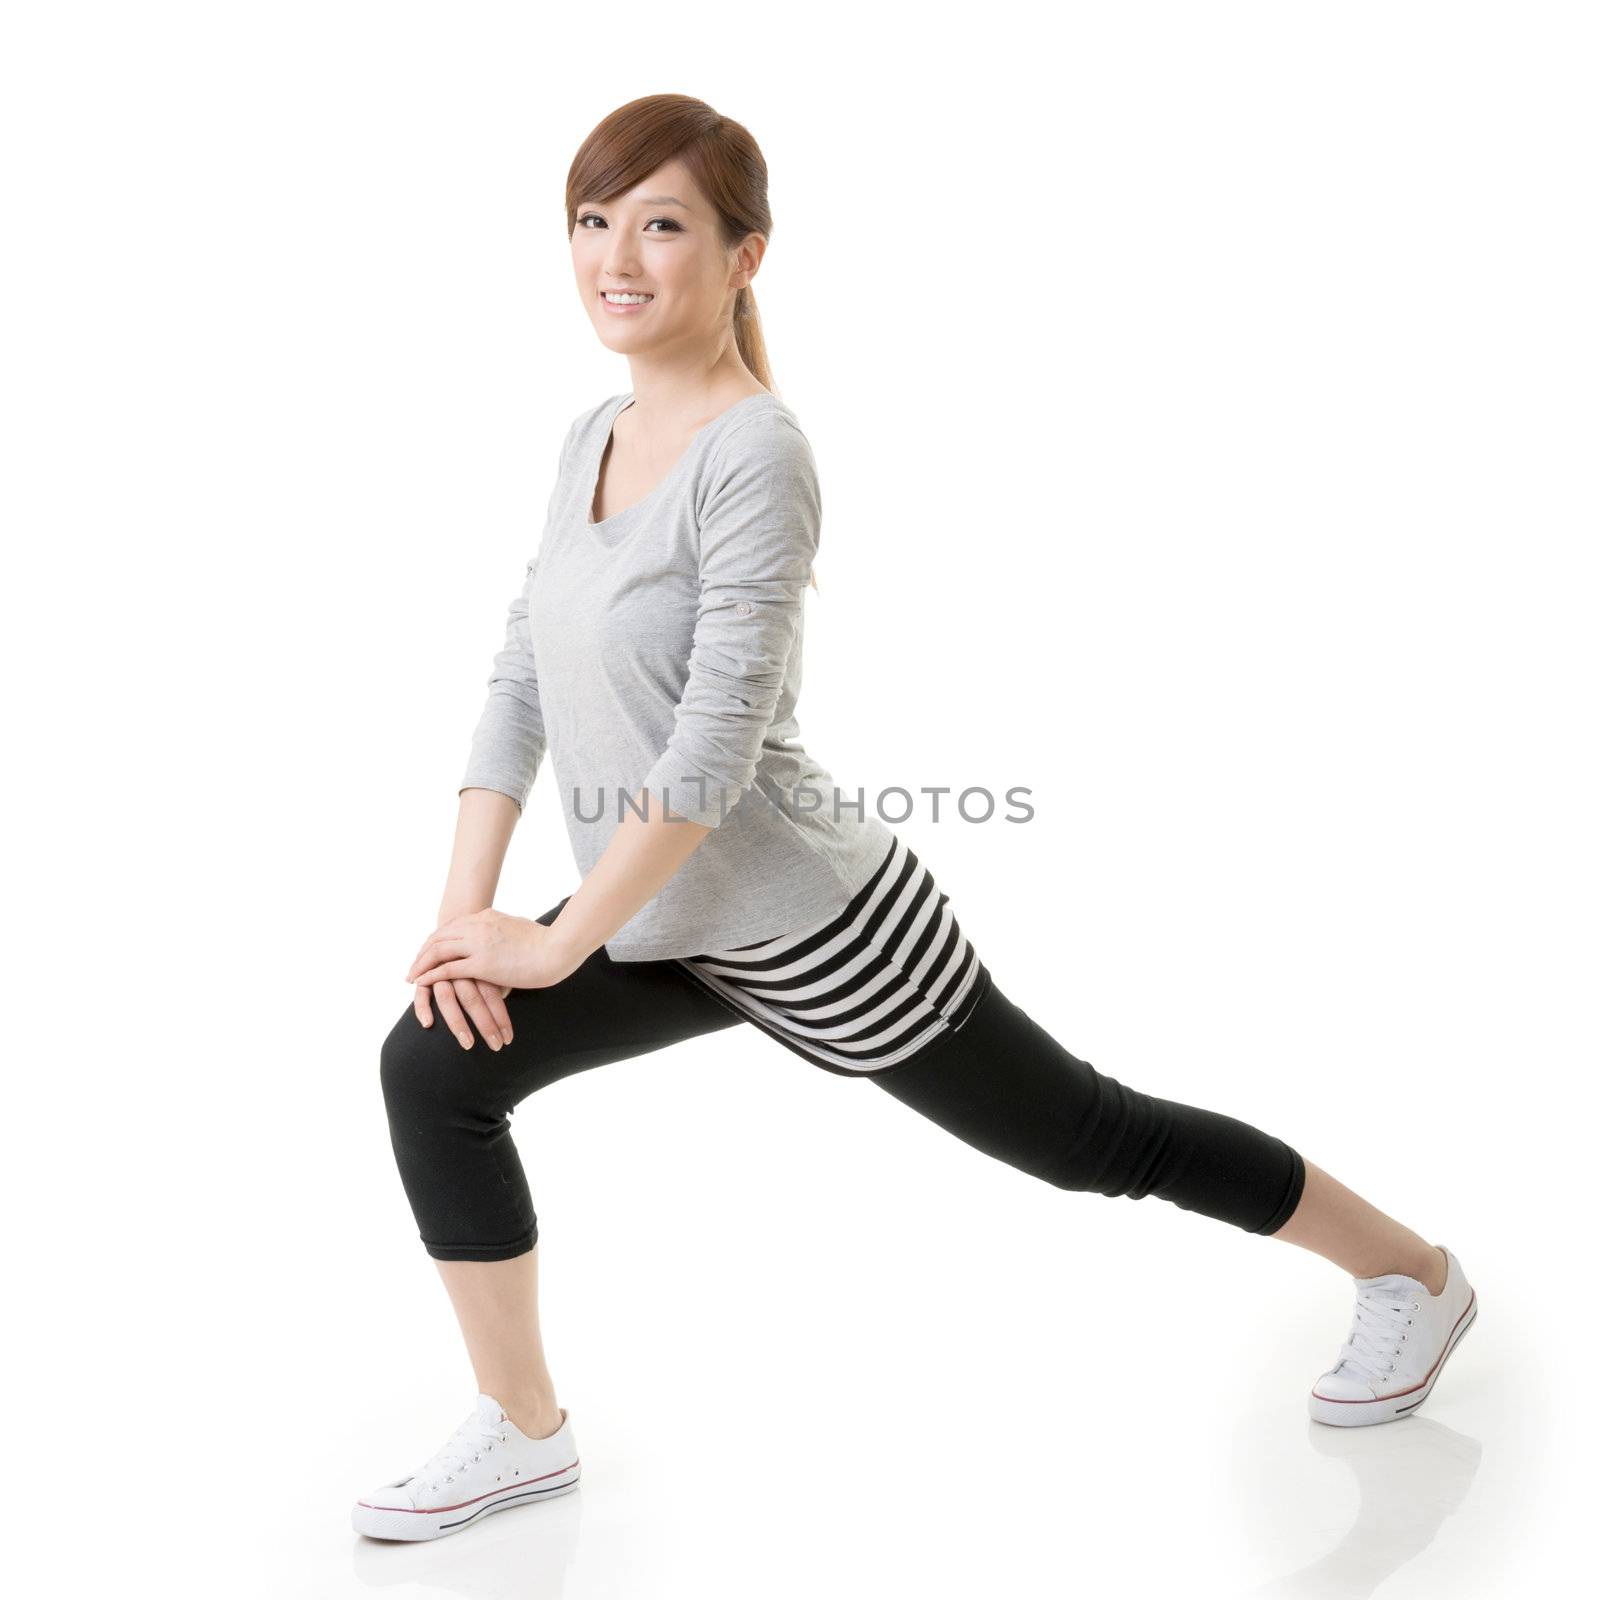 Fitness Asian girl doing stretch exercise, full length portrait isolated on white background.